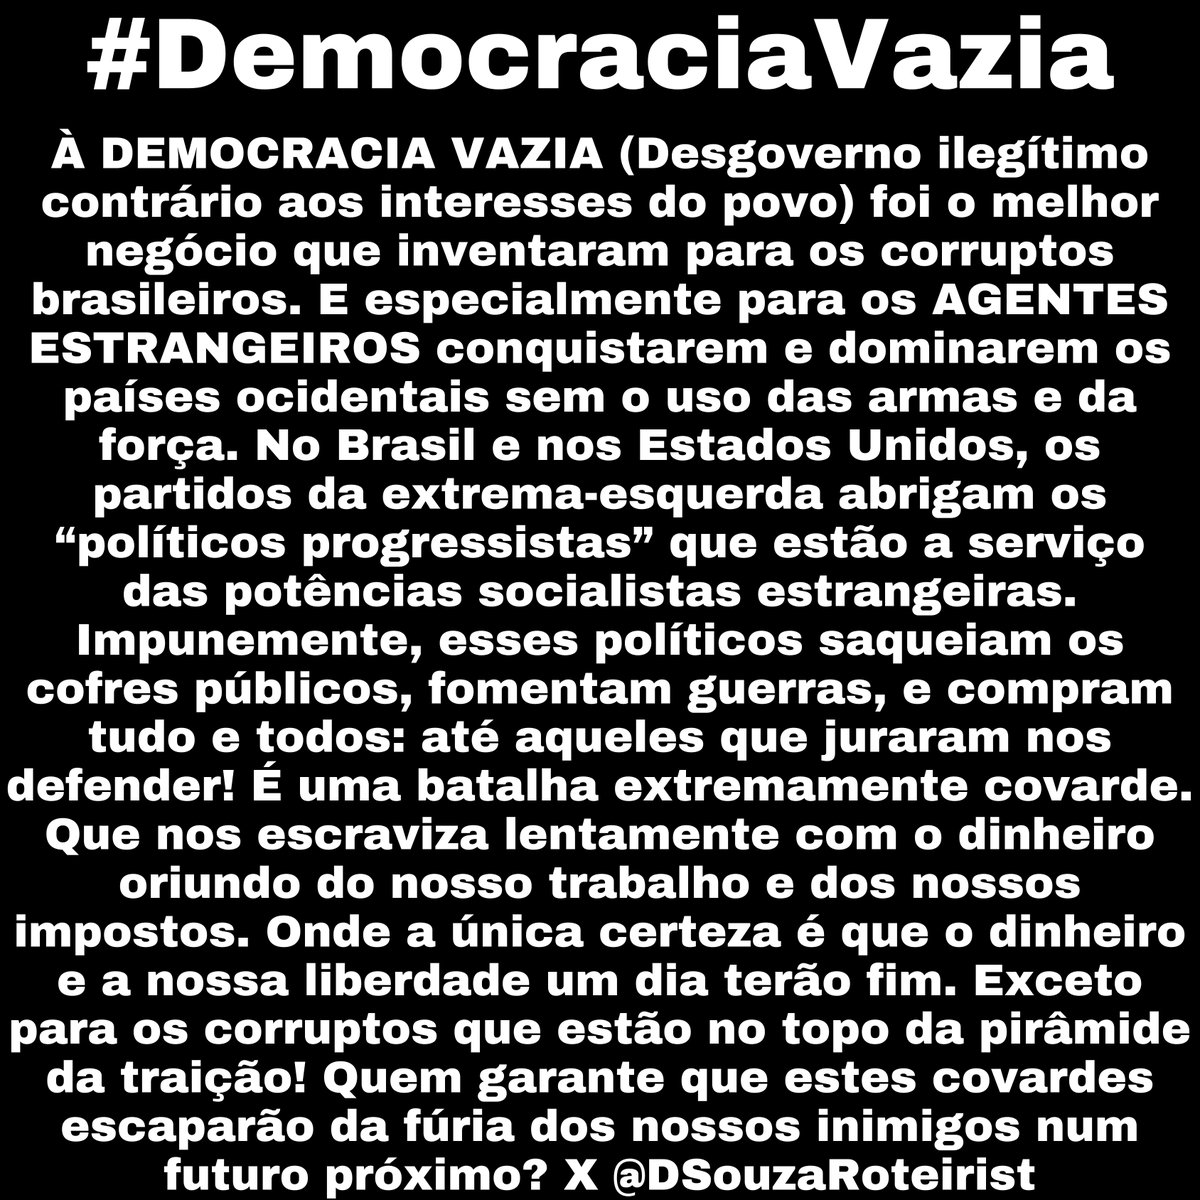 #DemocraciaVazia ...
#SomosBrasil #Direita #DIREITAforteUNIDA #DireitaSegueDireita #Bolsonaro #VoltaBolsonaro #Socialismo #OsPingosNosis #TaNaRoda #Opiniao #Brasil #foralula #PresiDengue #ExercitoBrasileiro #jornalismo #jornalismoindependente